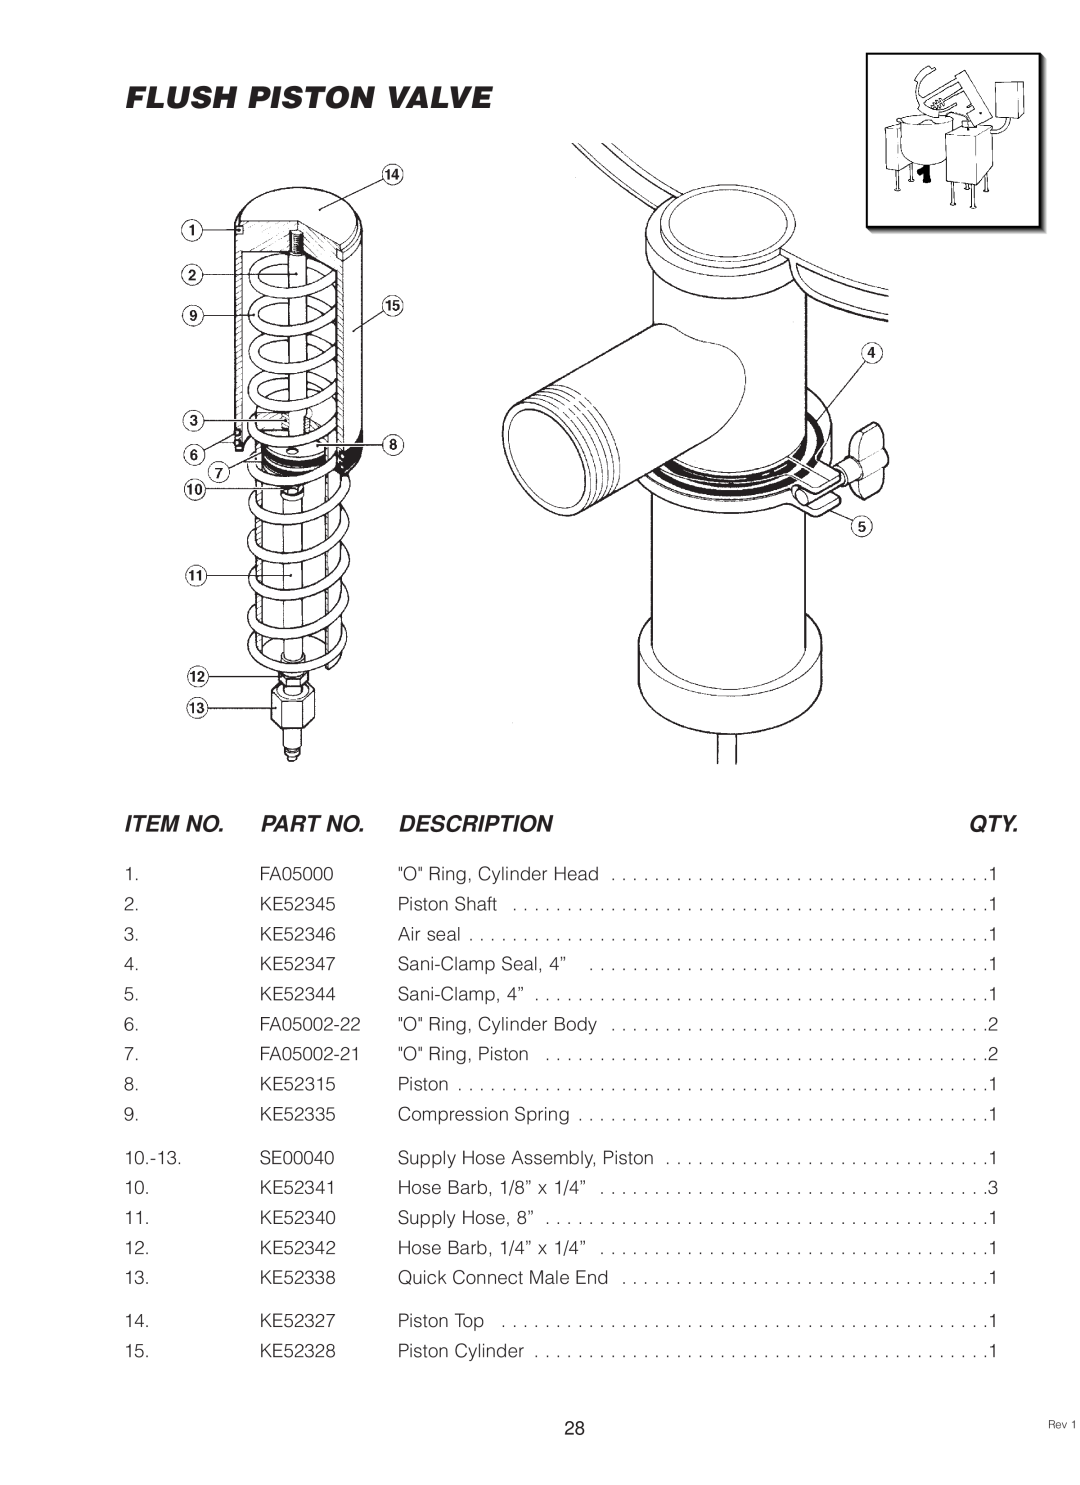 Cleveland Range MKDL-80-CC, MKDL-125-CC, MKDL-40-CC manual Flush Piston Valve, Item No, Description 